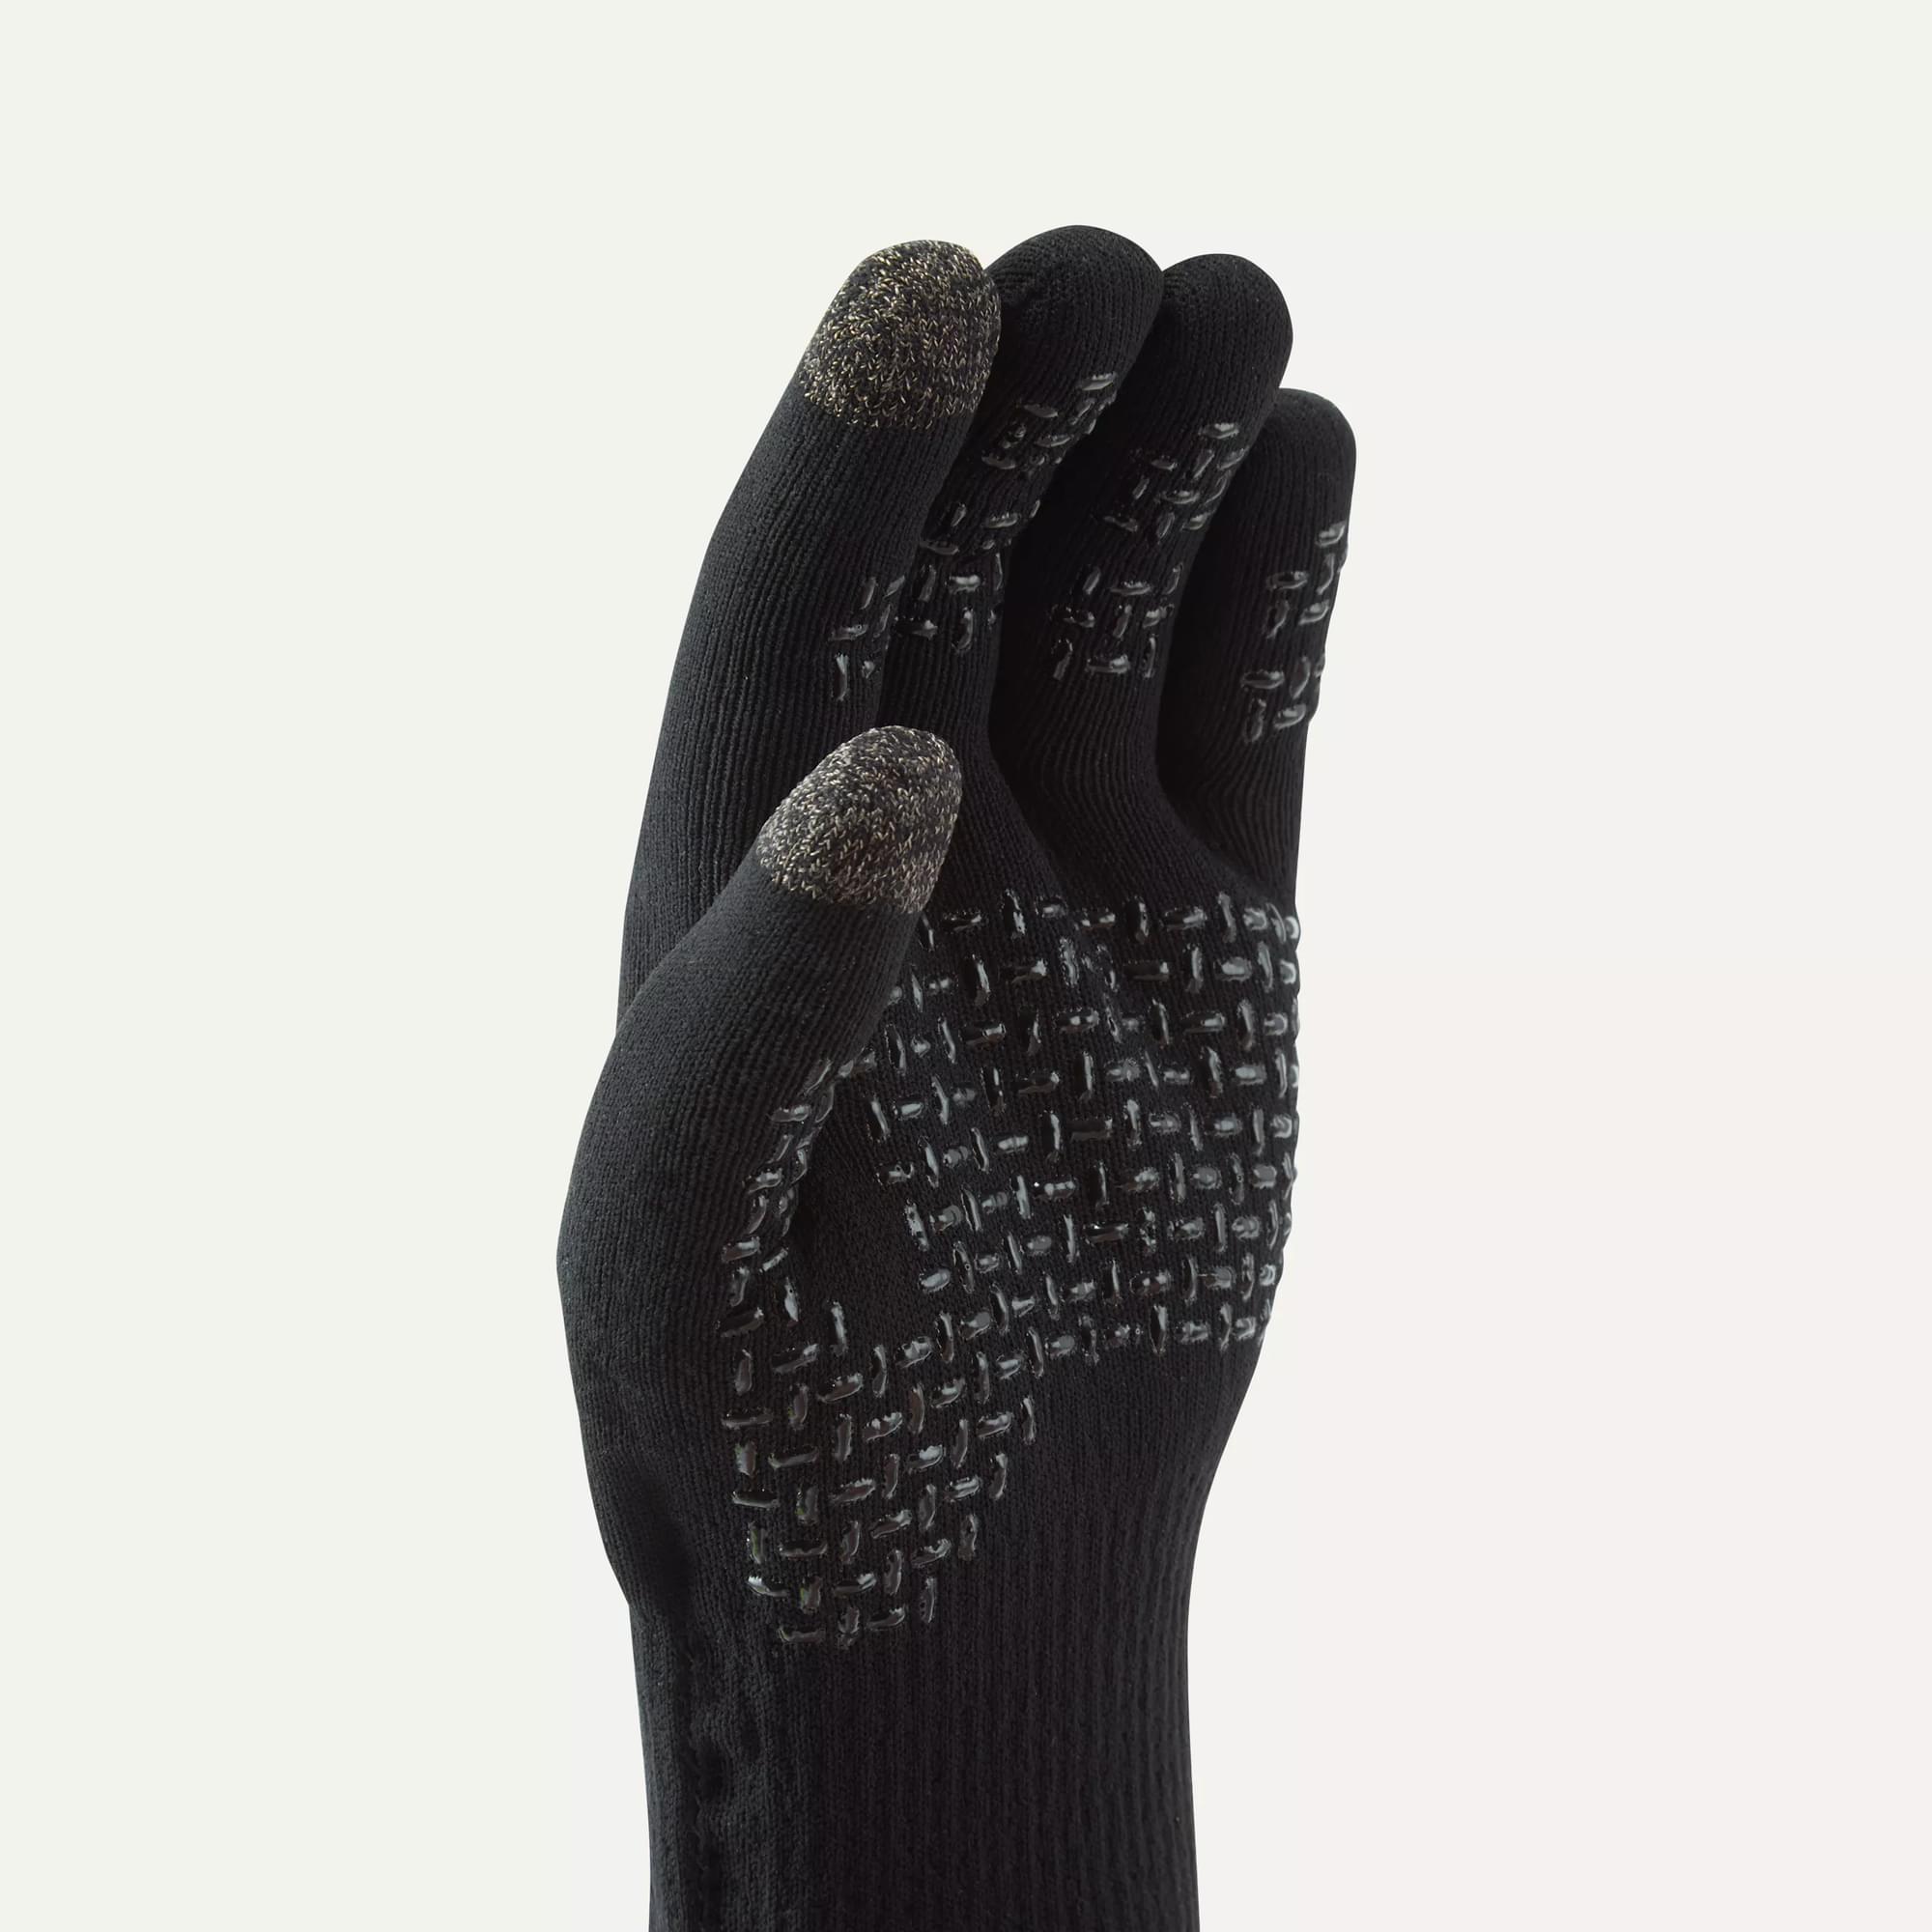 Sealskinz Kelling Waterproof All Weather Insulated Glove Black XL